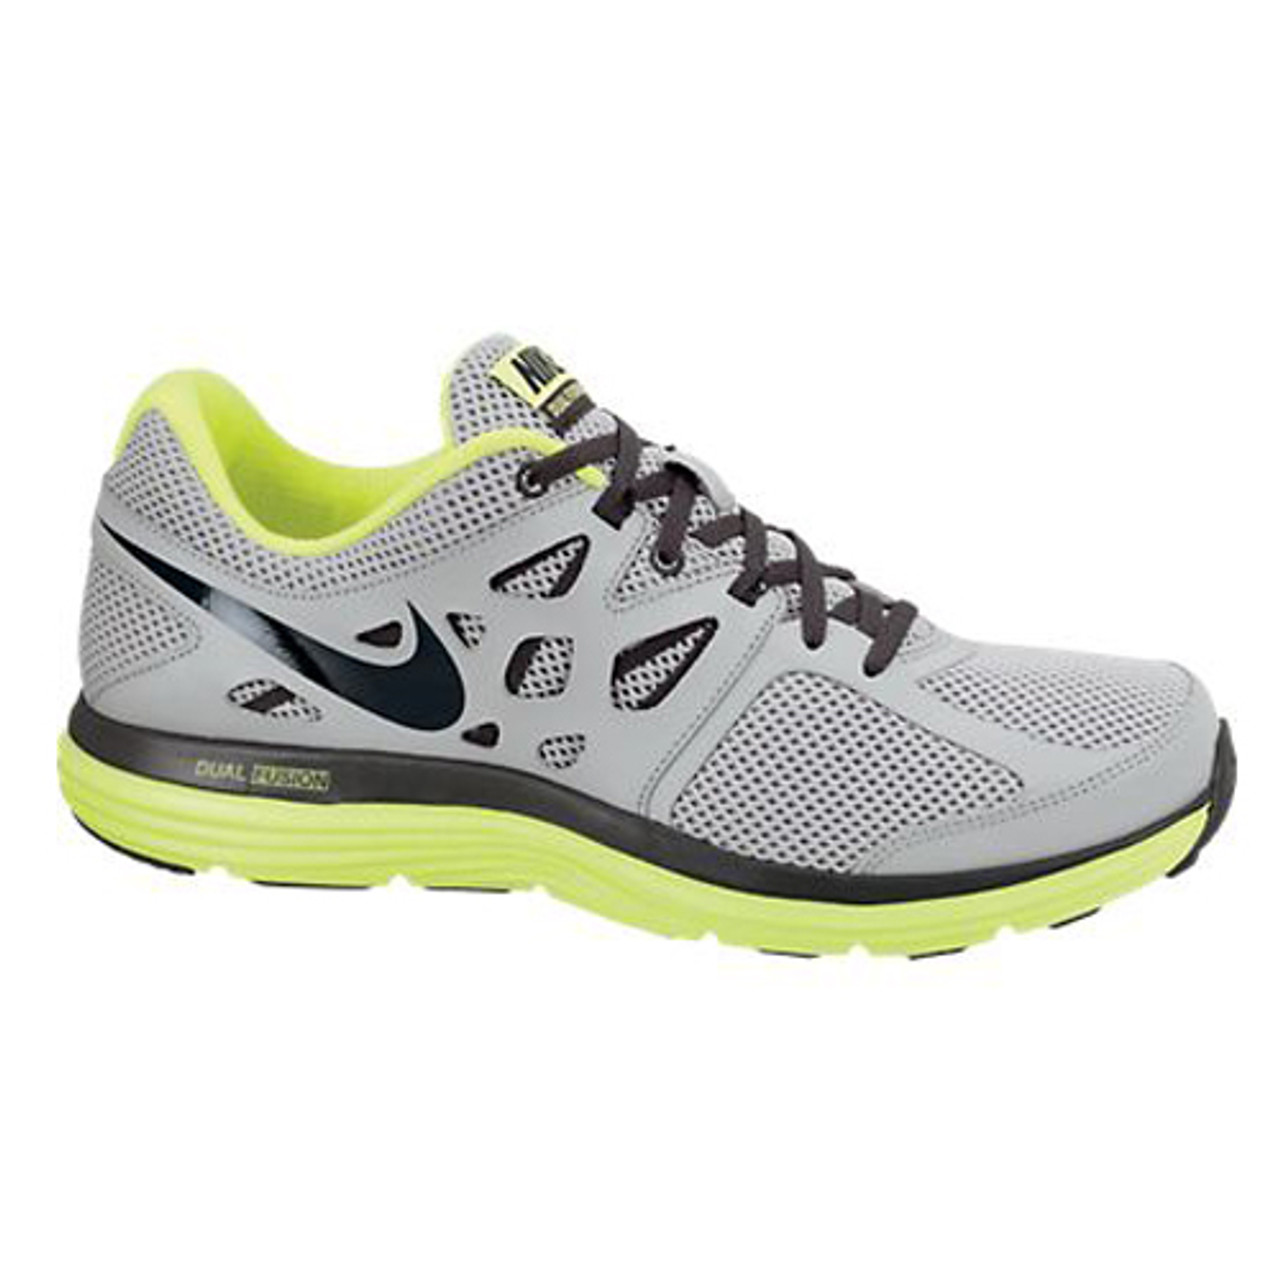 Nike Dual Fusion Lite Mens Running Shoes - Wolf Grey/Dark Charcoal/Volt/Black | Discount Nike Men's Athletic & More - Shoolu.com | Shoolu.com